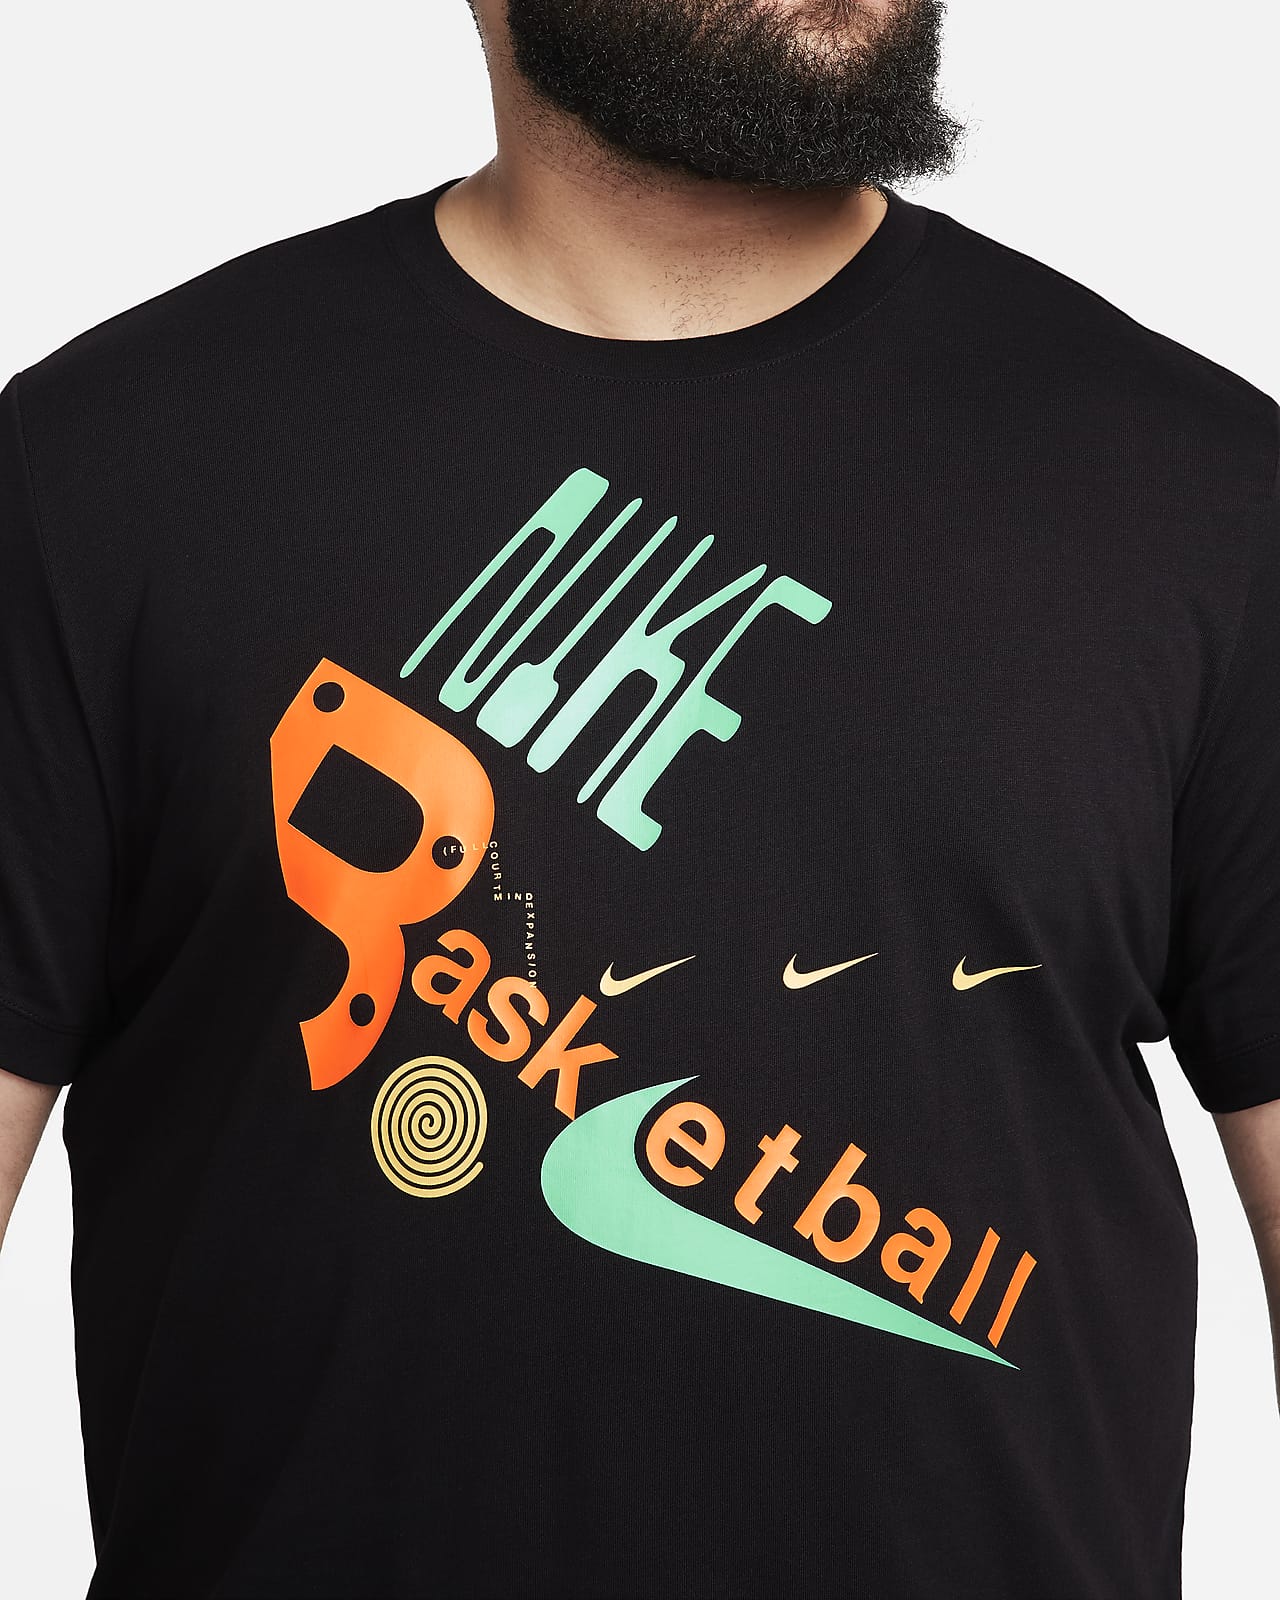 Nike Swoosh Men's T-Shirt